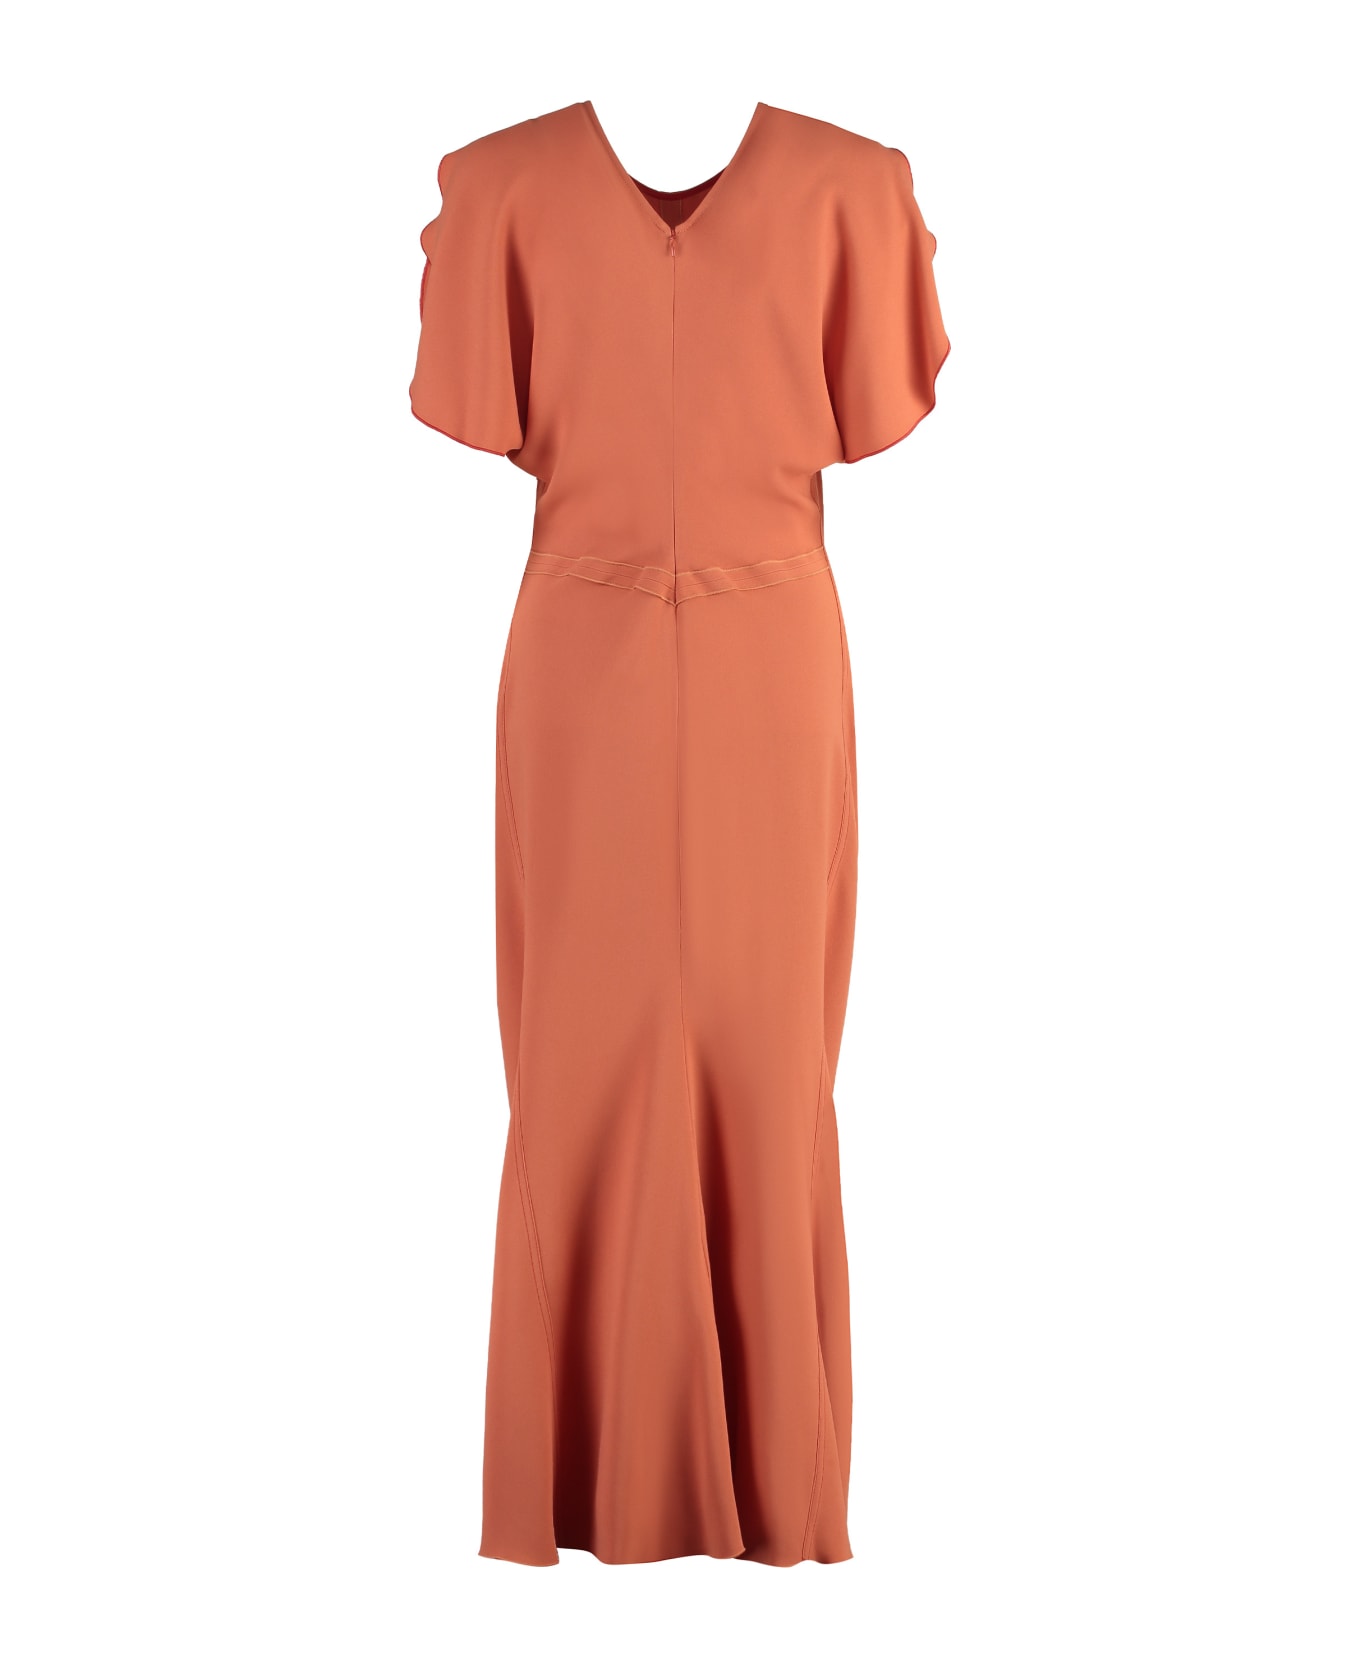 Victoria Beckham Cady Dress - Orange